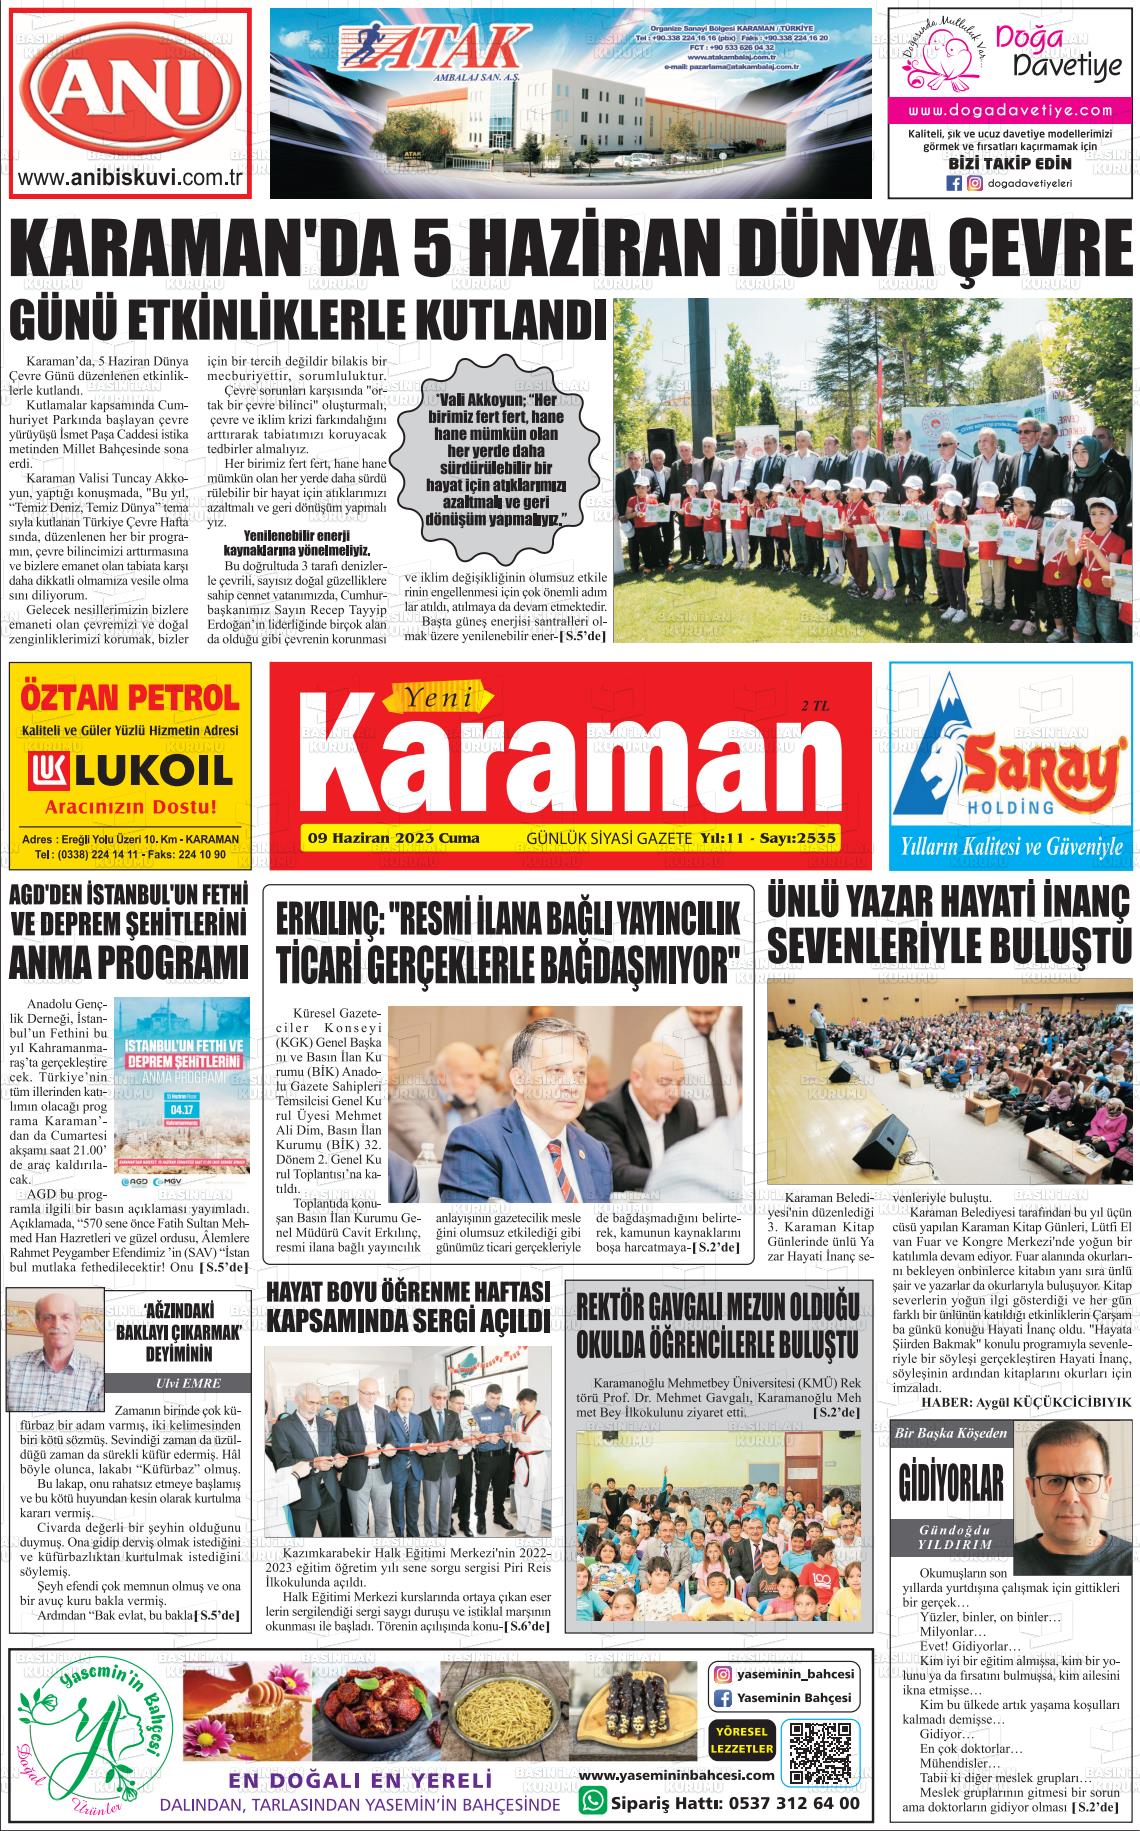 09 Haziran 2023 Yeni Karaman Gazete Manşeti